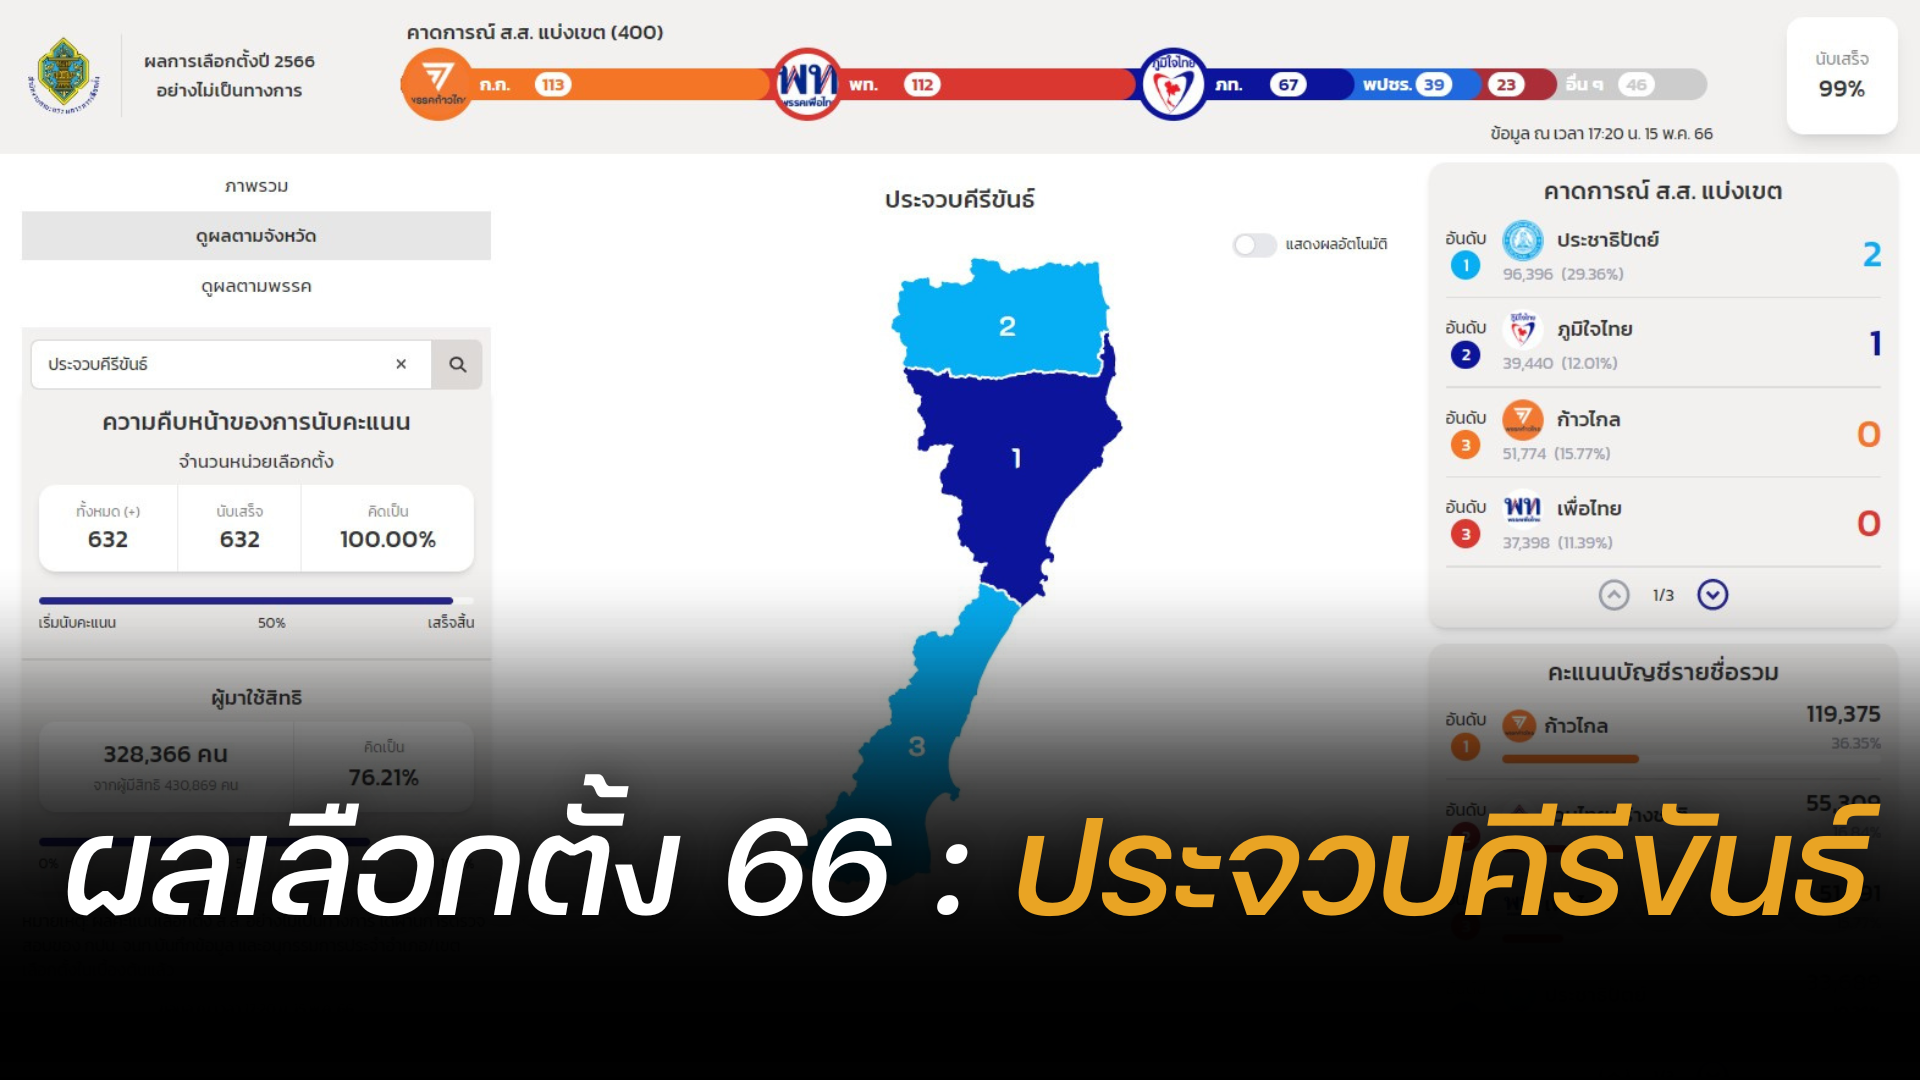 Thailand election 2566